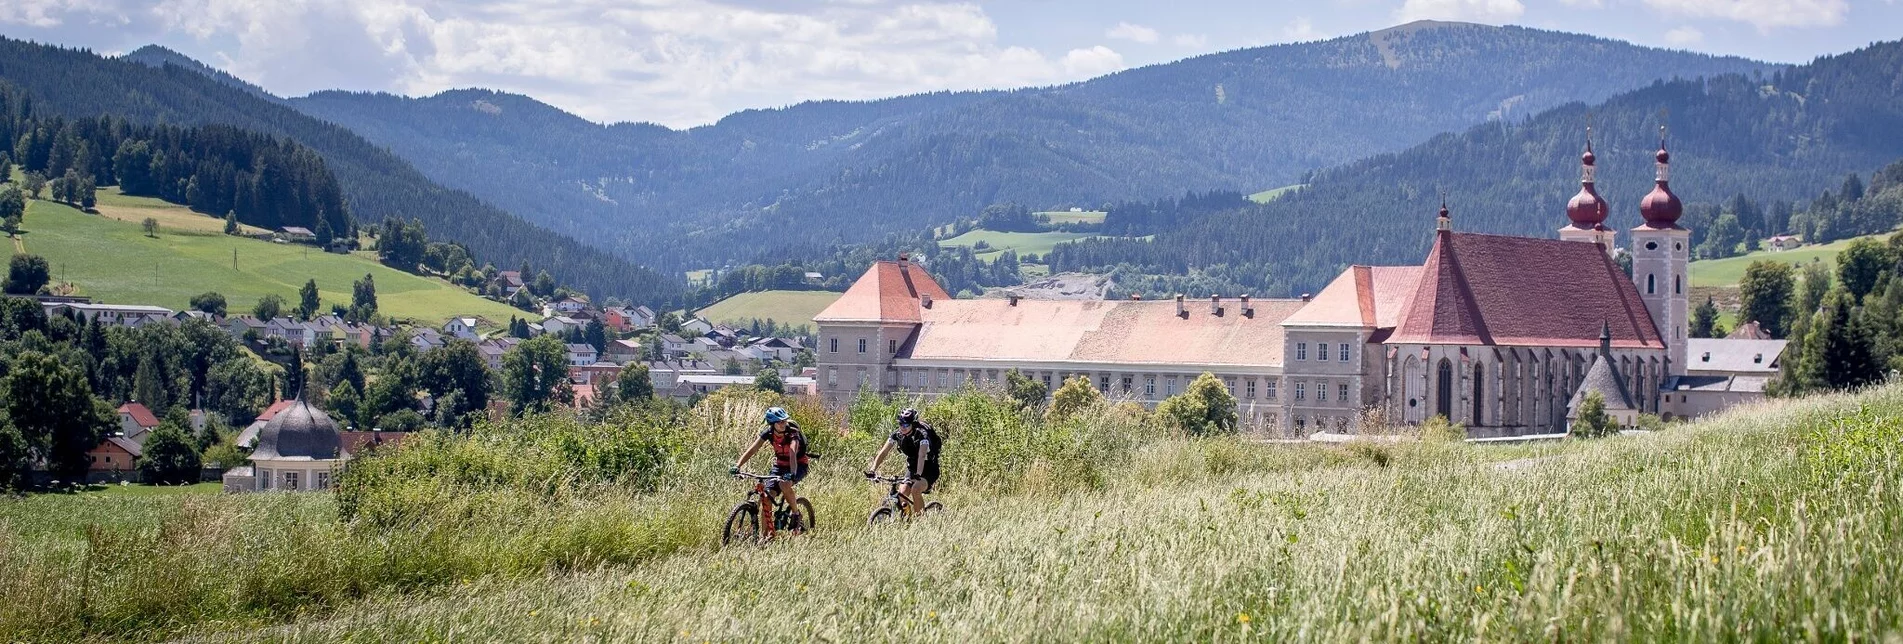 Bike Riding Via Natura bike paths - Touren-Impression #1 | © Tourismusverband Region Murau